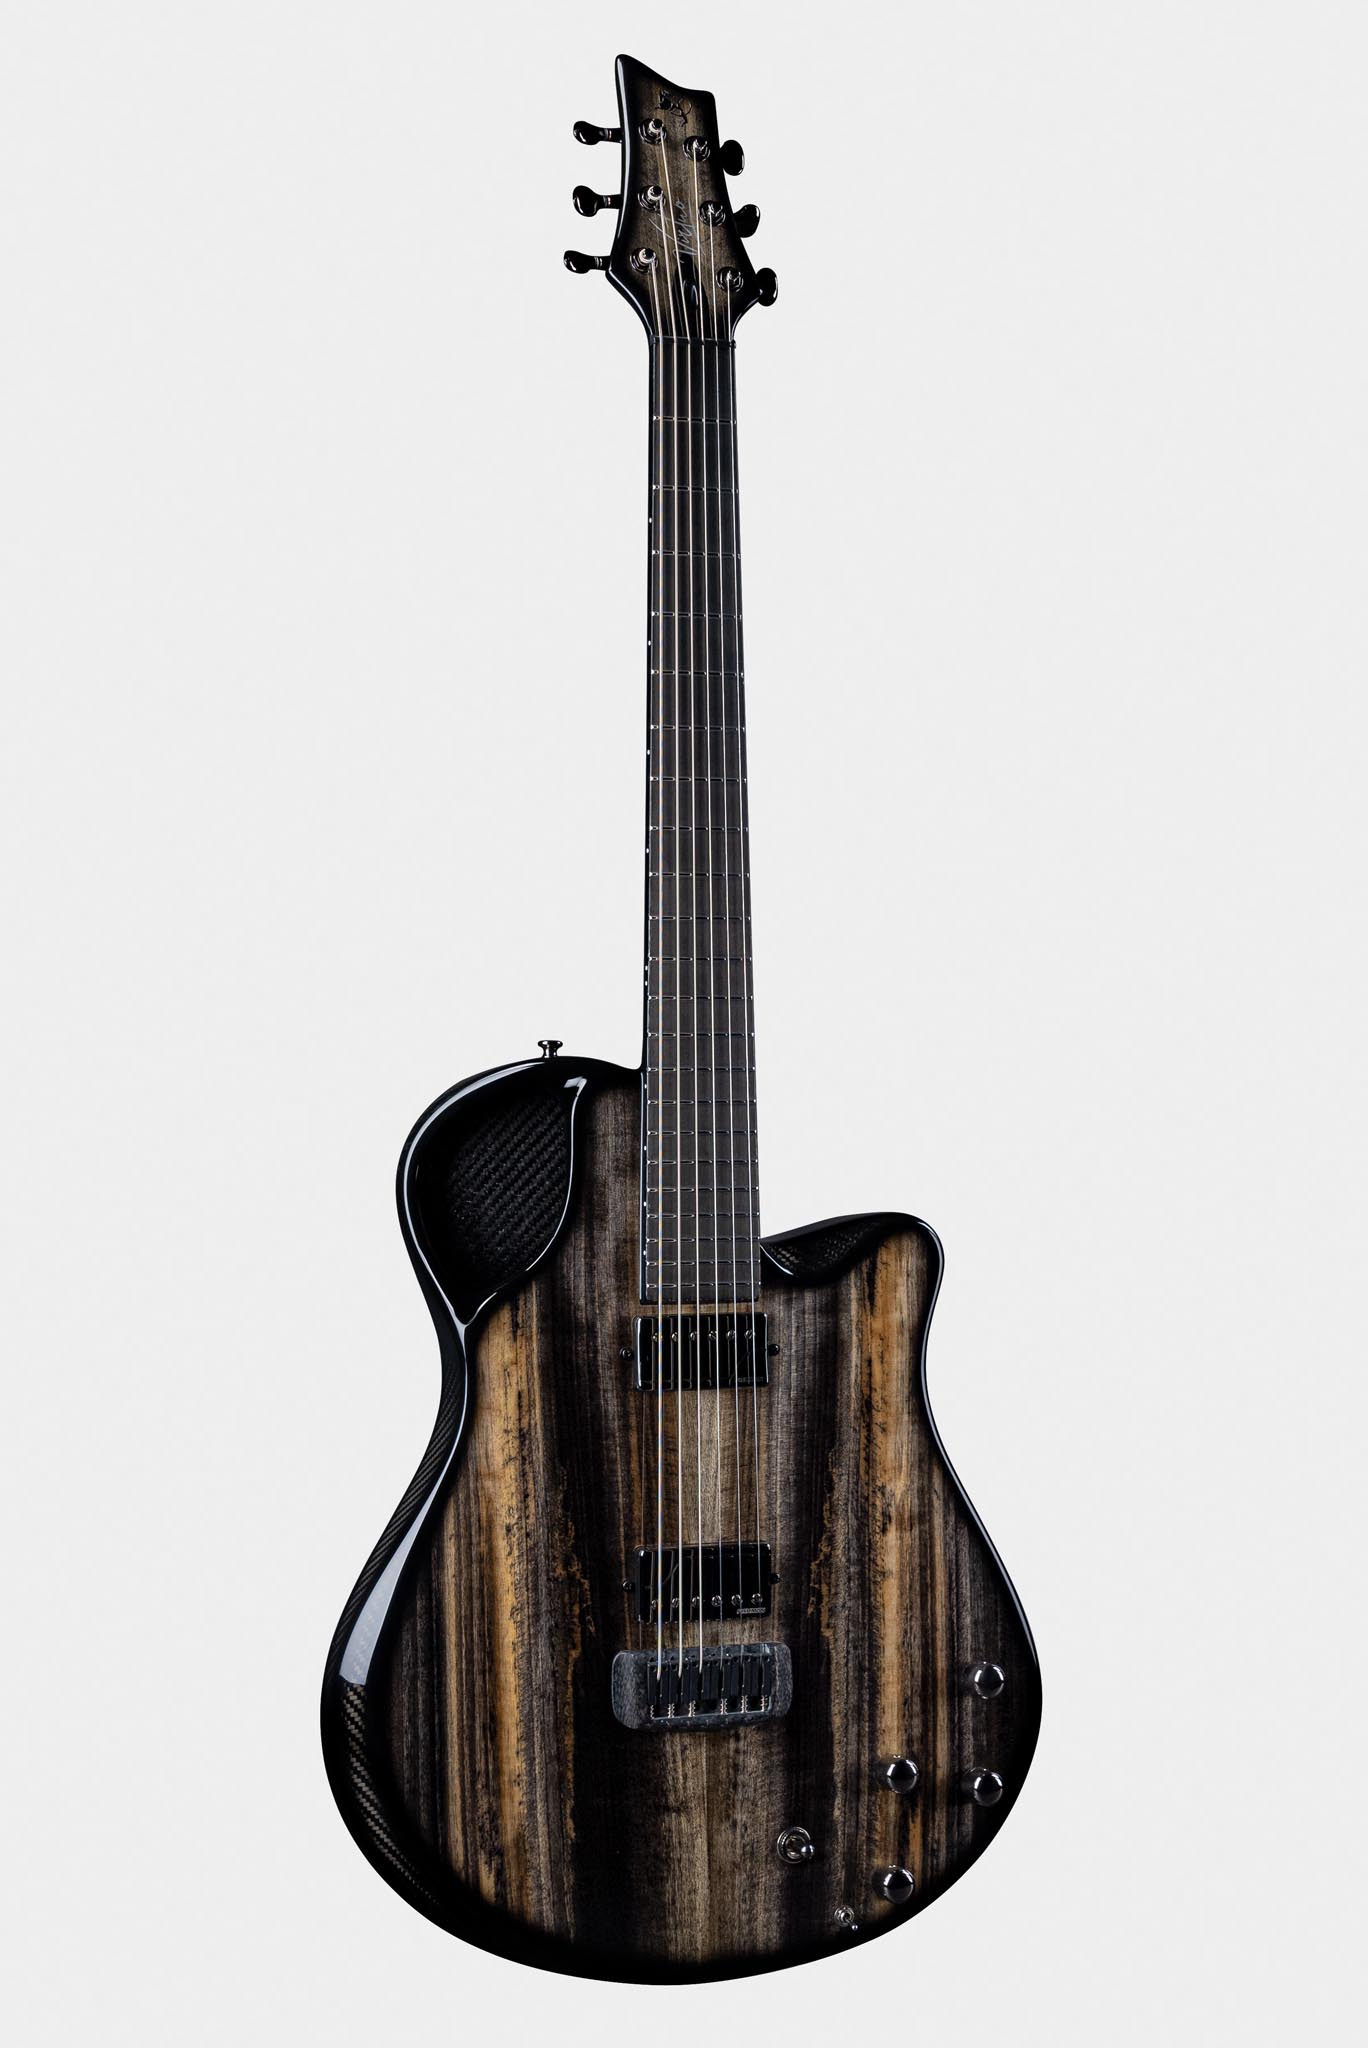 Emerald Virtuo Harbonica Guitar Made of Carbon Fiber